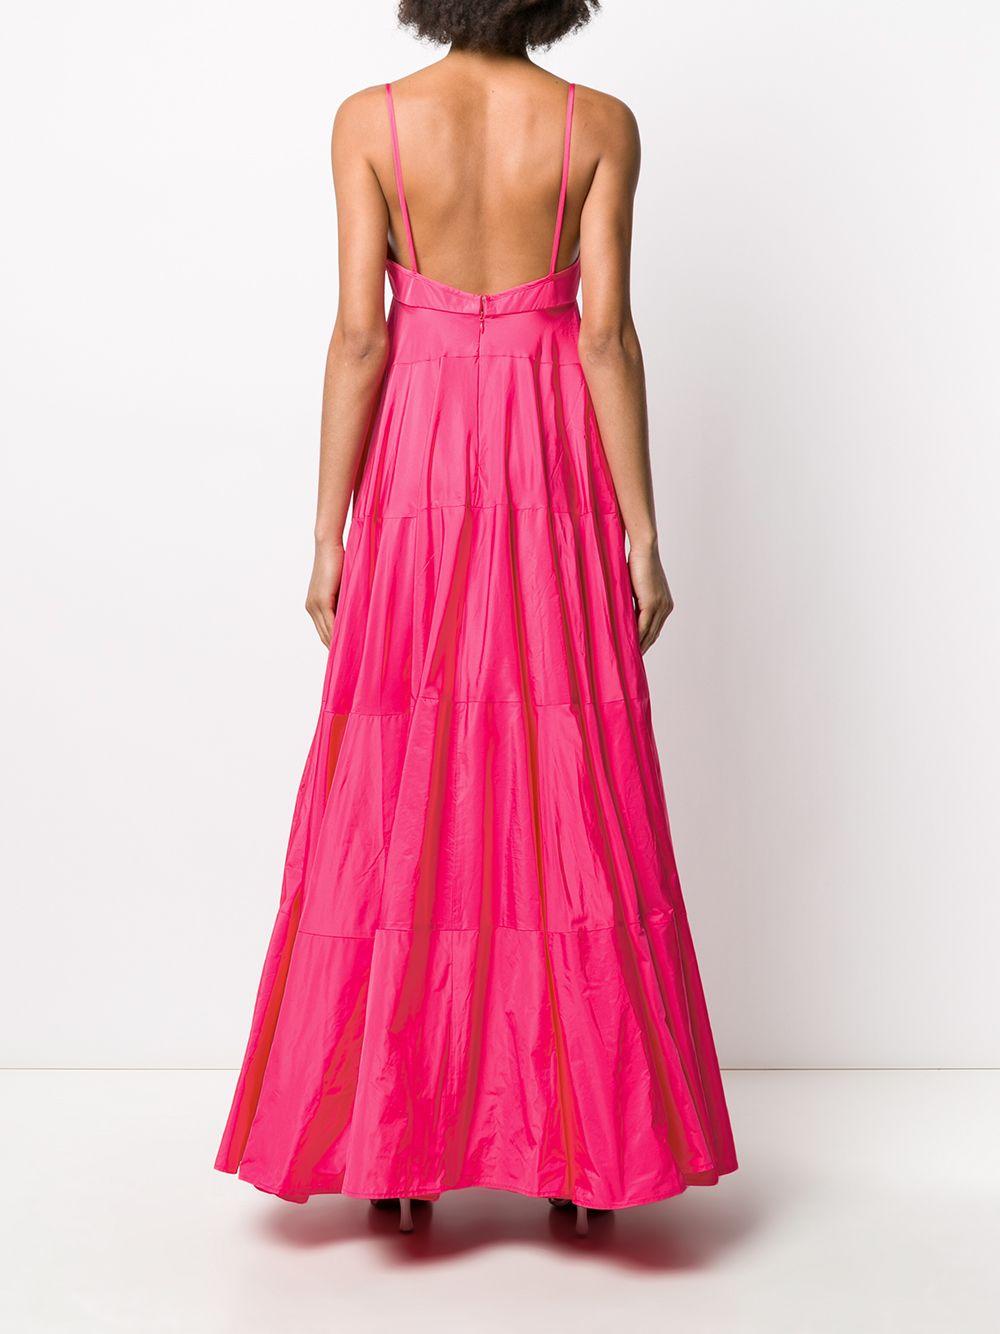 Jacquemus La Robe Manosque Taffeta Maxi-dress in Pink - Lyst